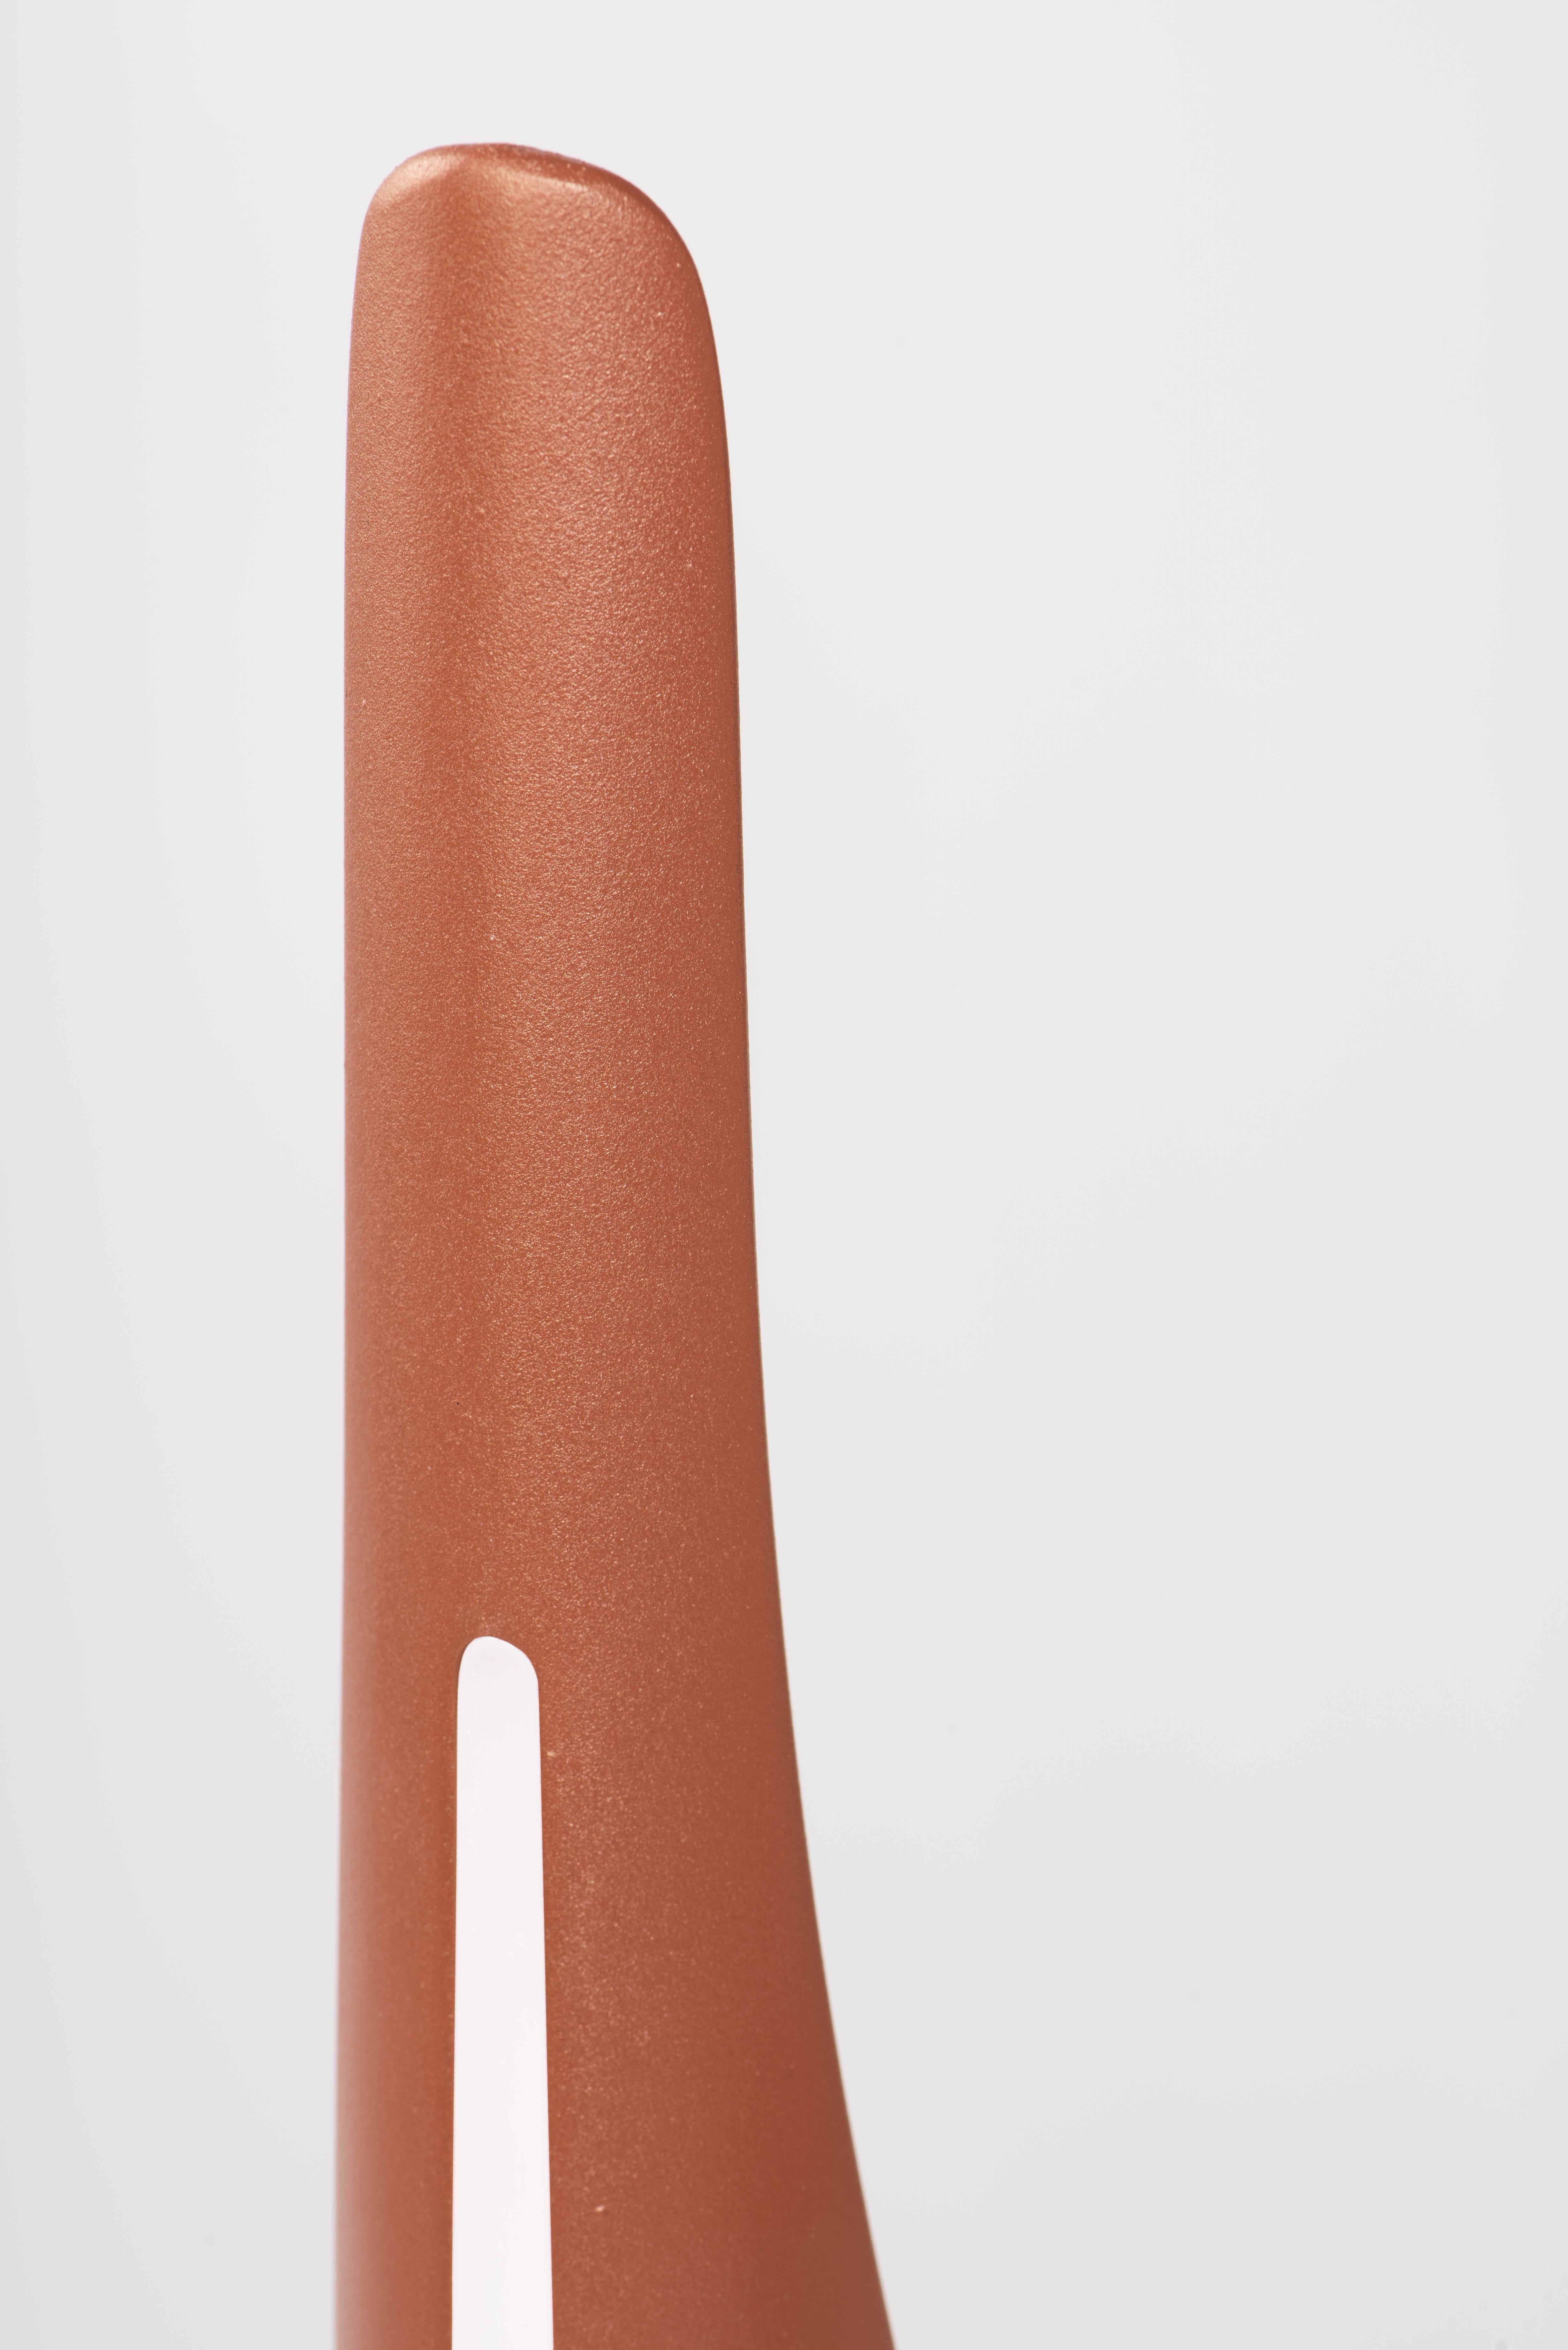 Modern by Cyril Rumpler Handmade Table Light Aluminium Silhouette Copper For Sale 12